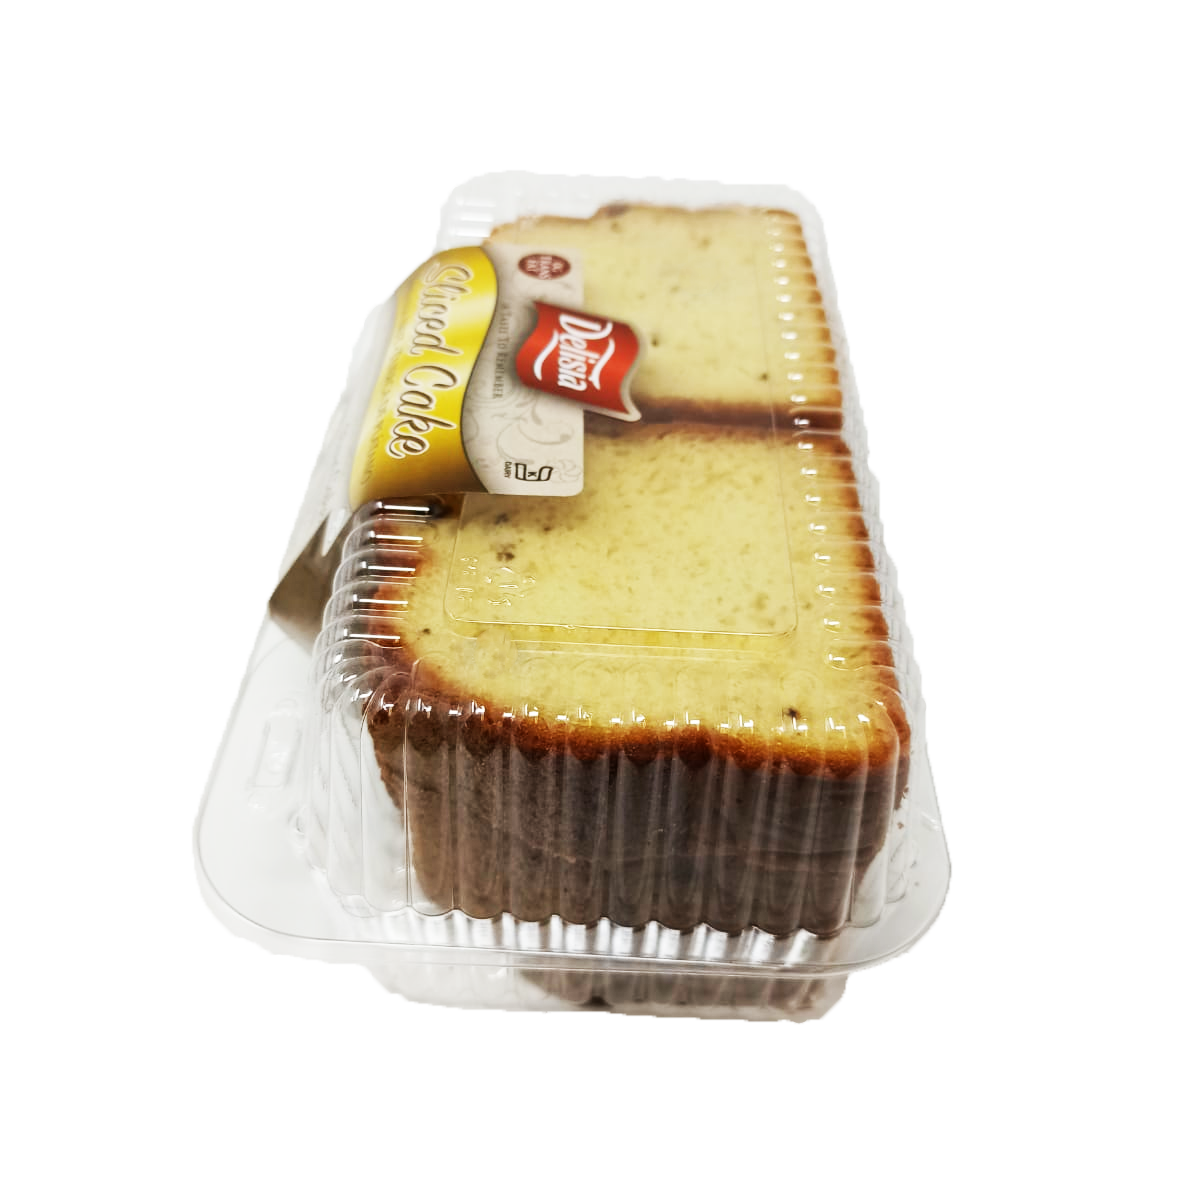 Delisia Sliced Cake Banana NUT Cake 397G 14oz